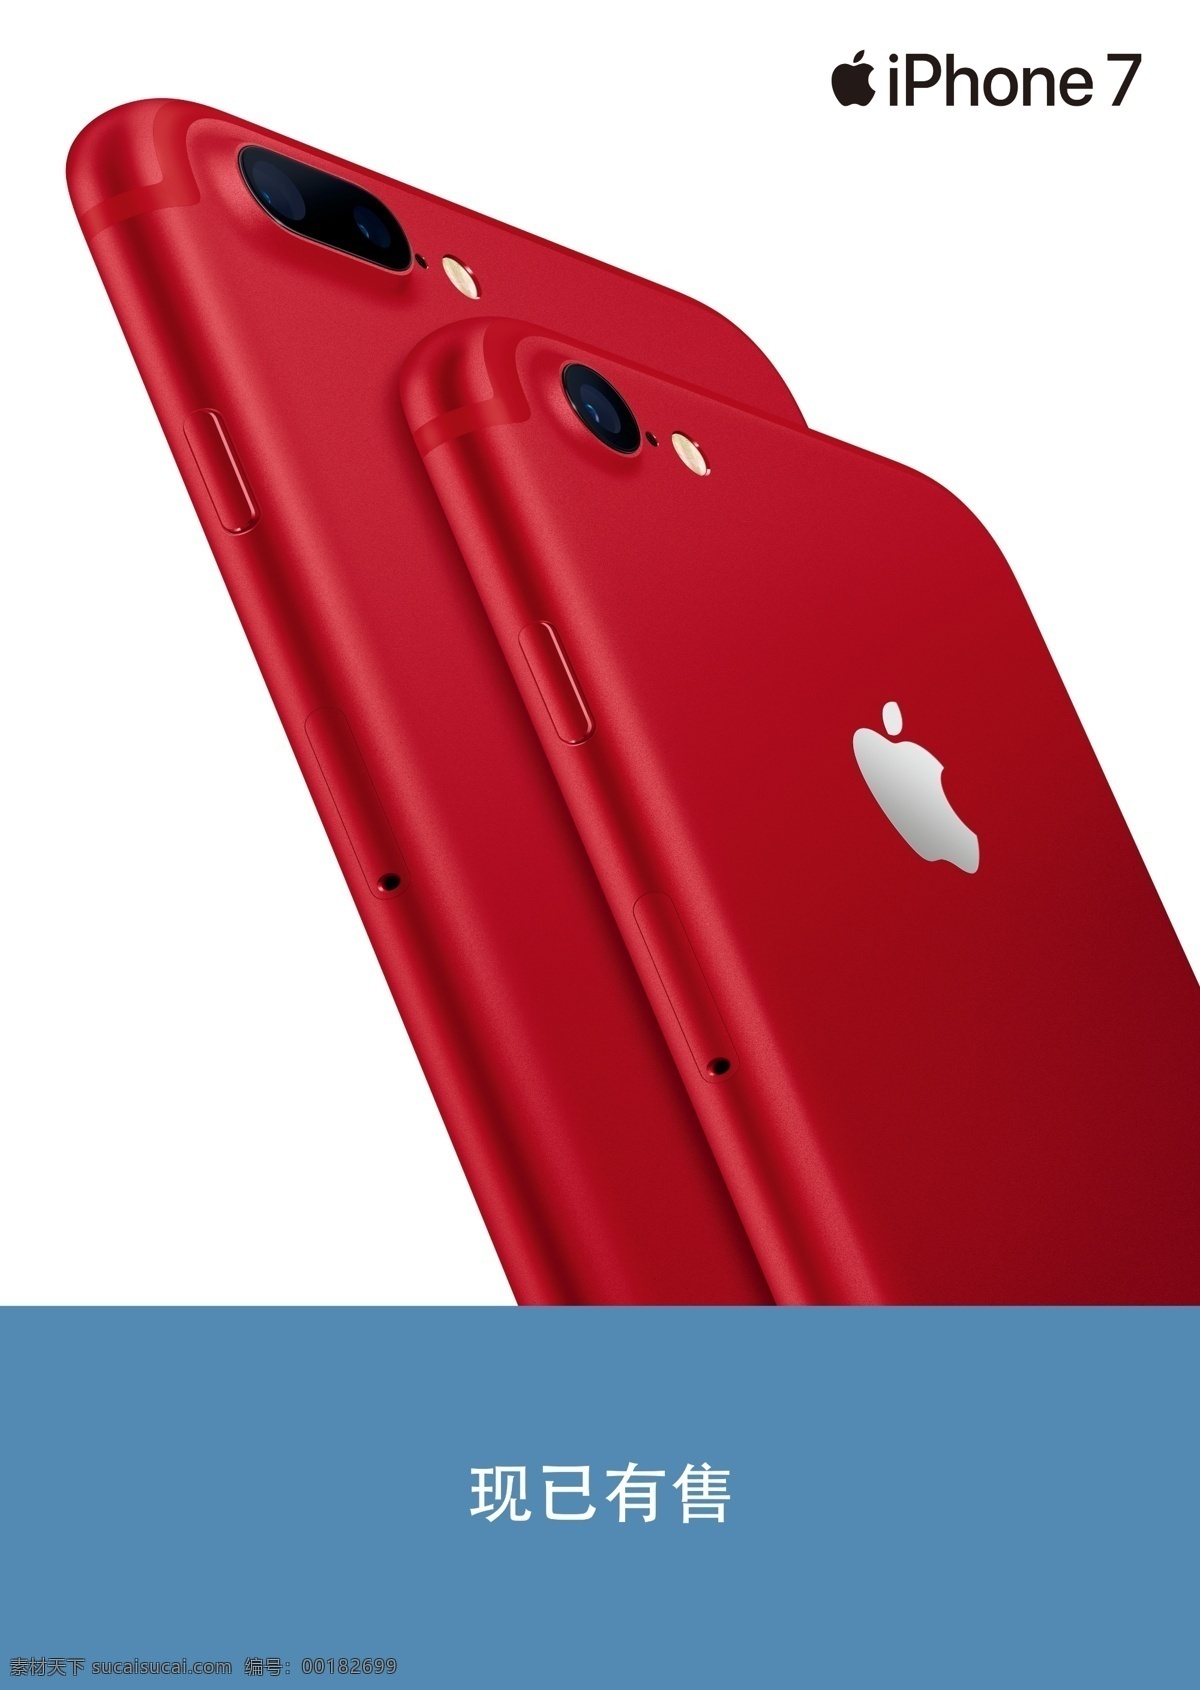 iphone7 苹果展板 苹果7图片 苹果海报设计 iphone 软膜 手机店广告 红色 红色开机界面 苹果7红色 苹果灯箱 苹果 高清图 通讯海报